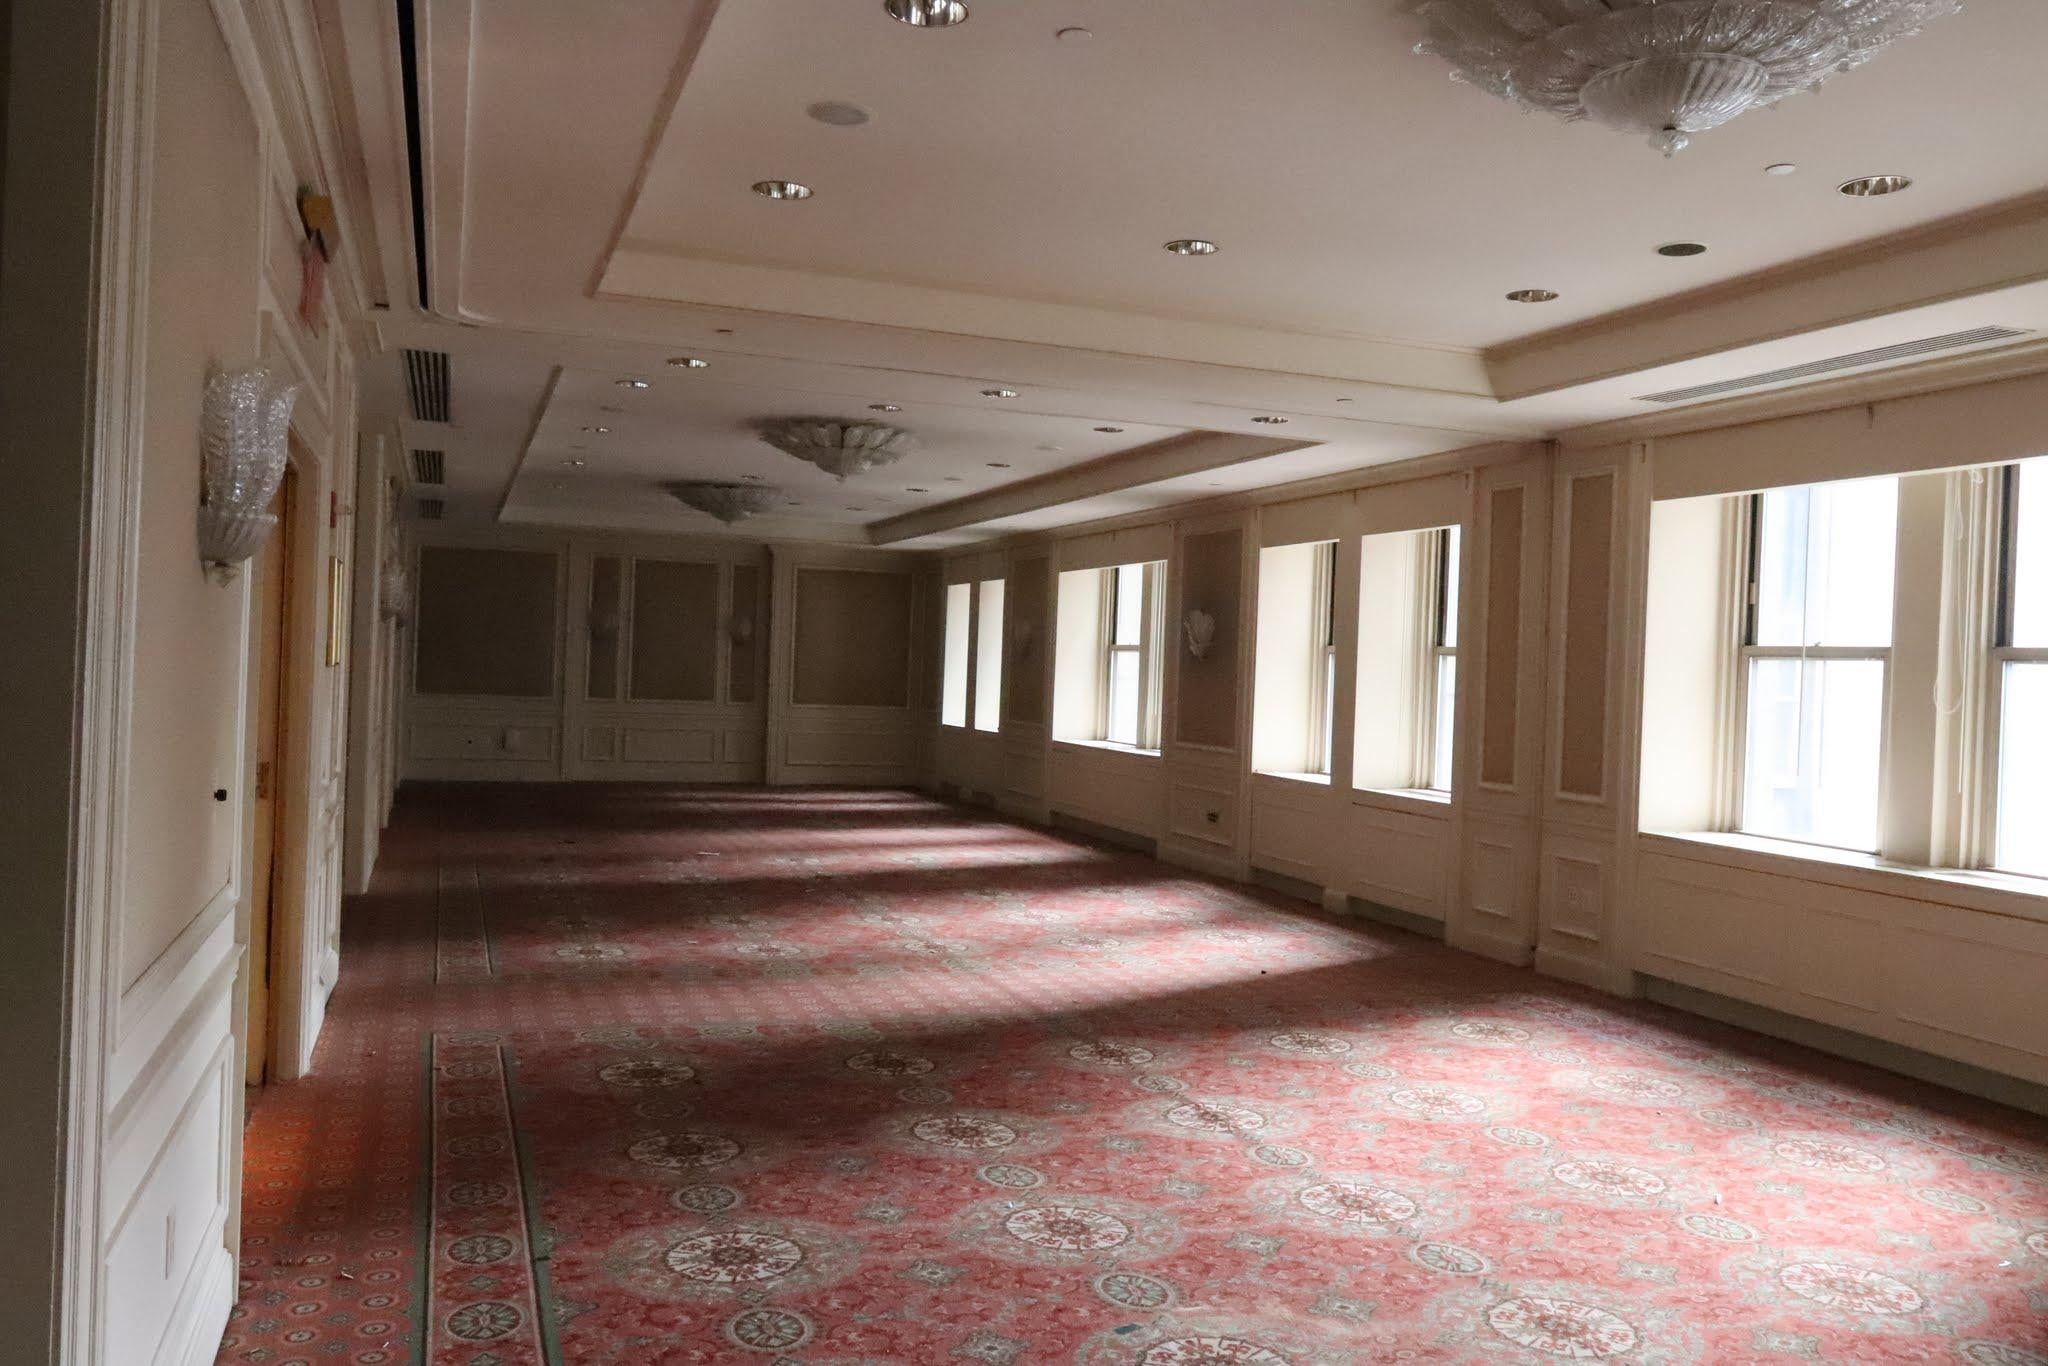 Waldorf Astoria Barovier & Toso Ceiling Chandelier Spade Design For Sale 4